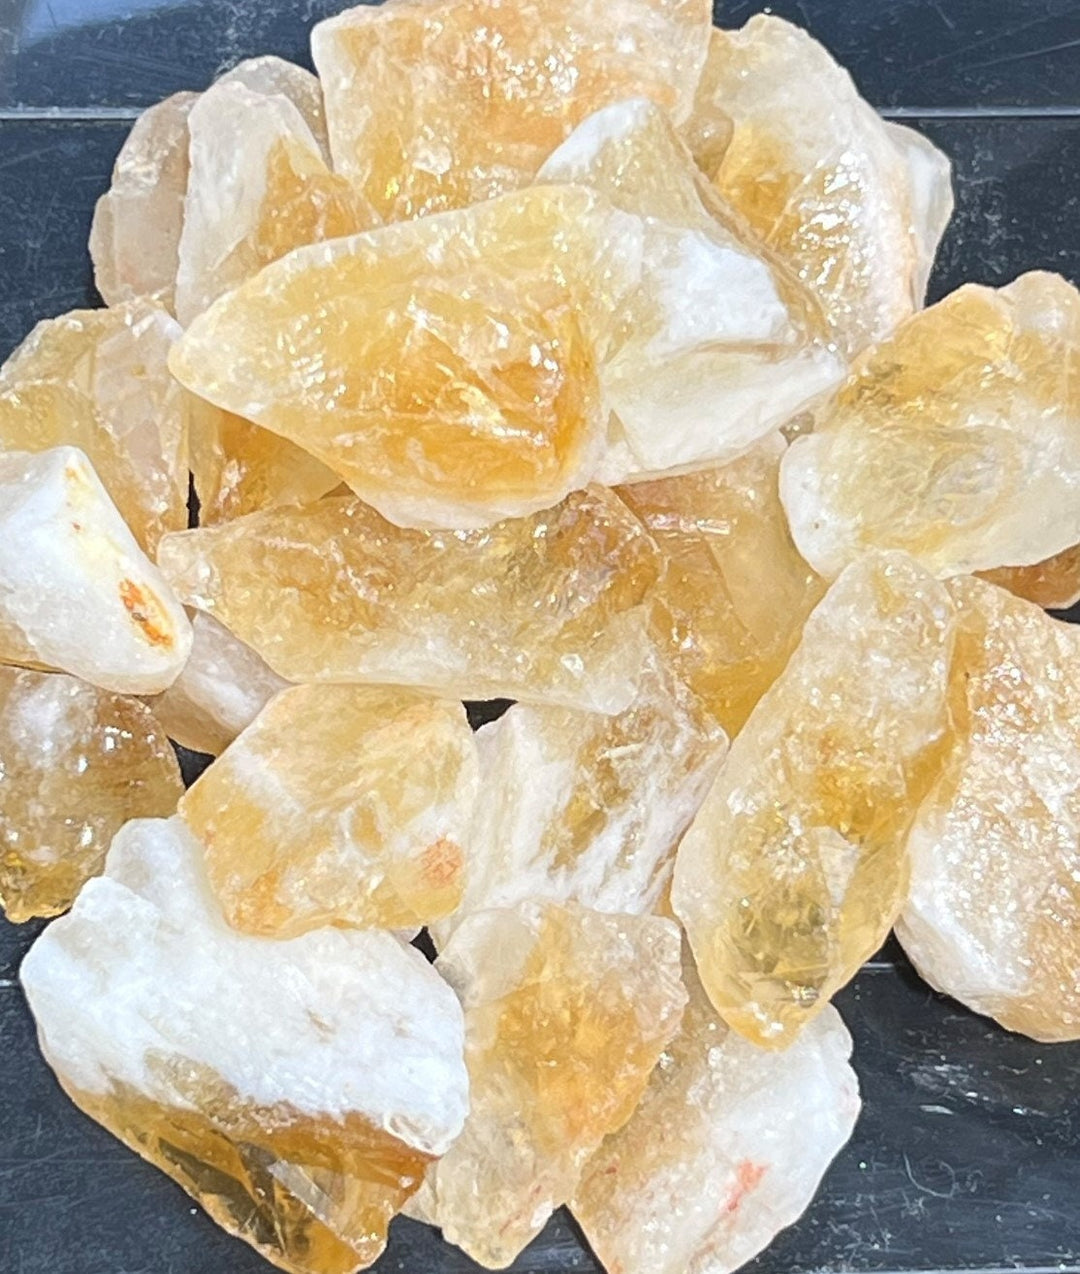 Citrine Crystal Rough (1 Kilo)( 2.2 LBs) Bulk Wholesale Lot Raw Gemstones Healing Crystals And Stones